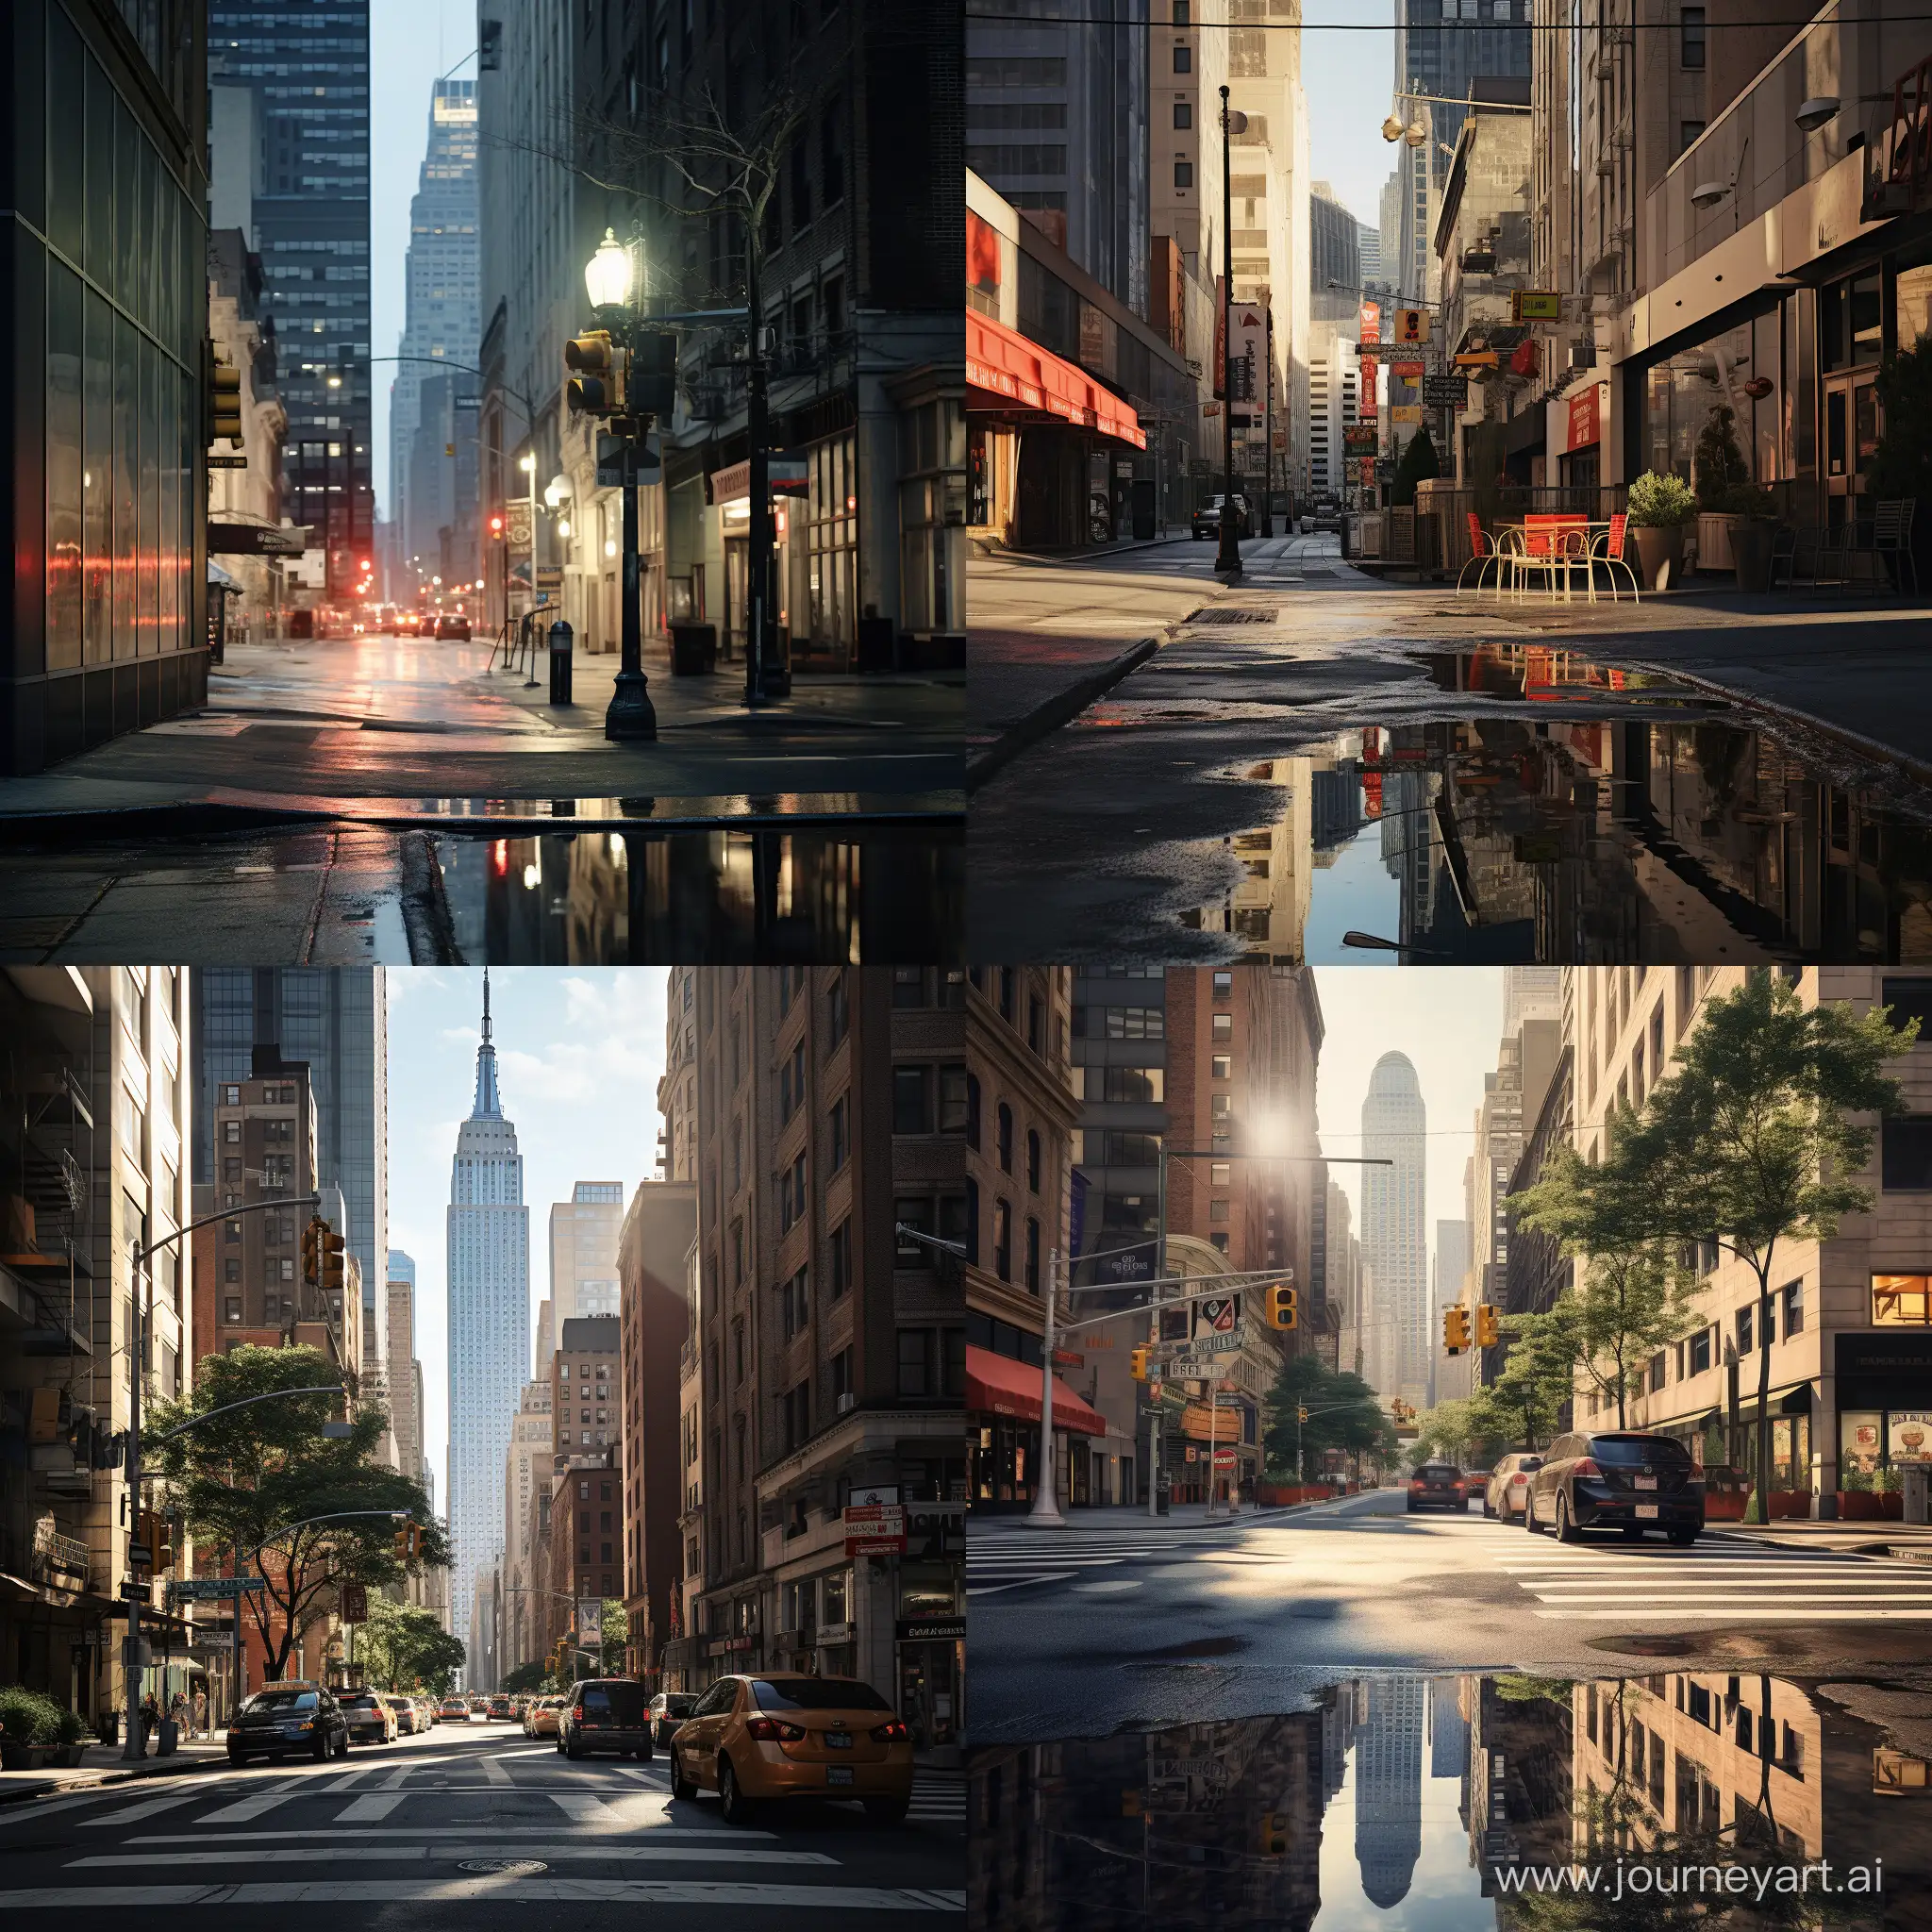 Tranquil-Street-Scene-in-New-York-City